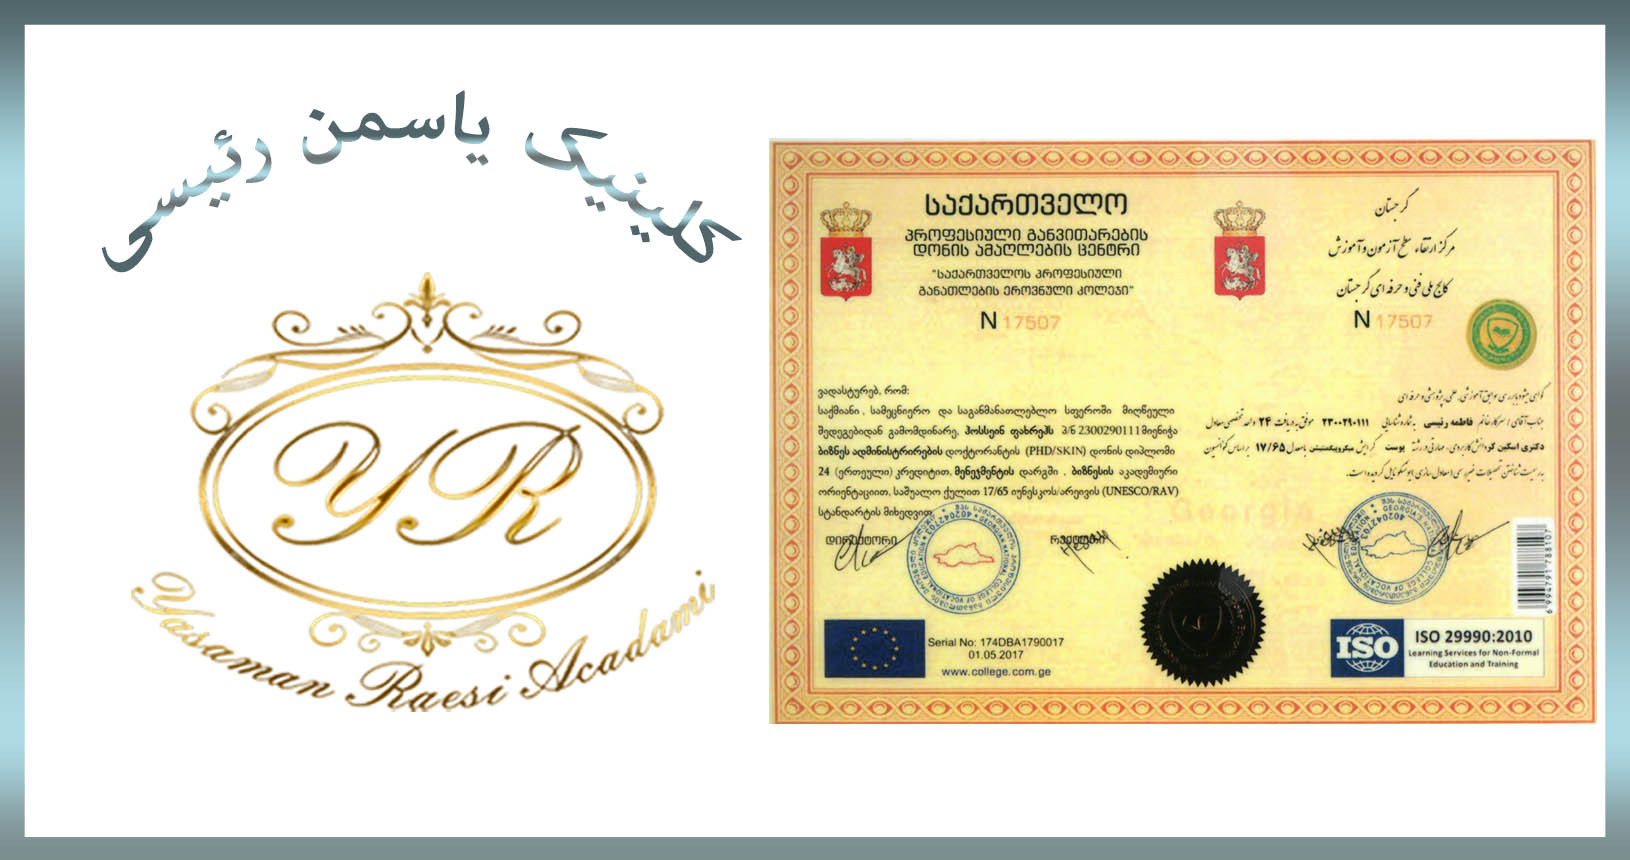 Appreciation Certificate of Yasaman Raesi